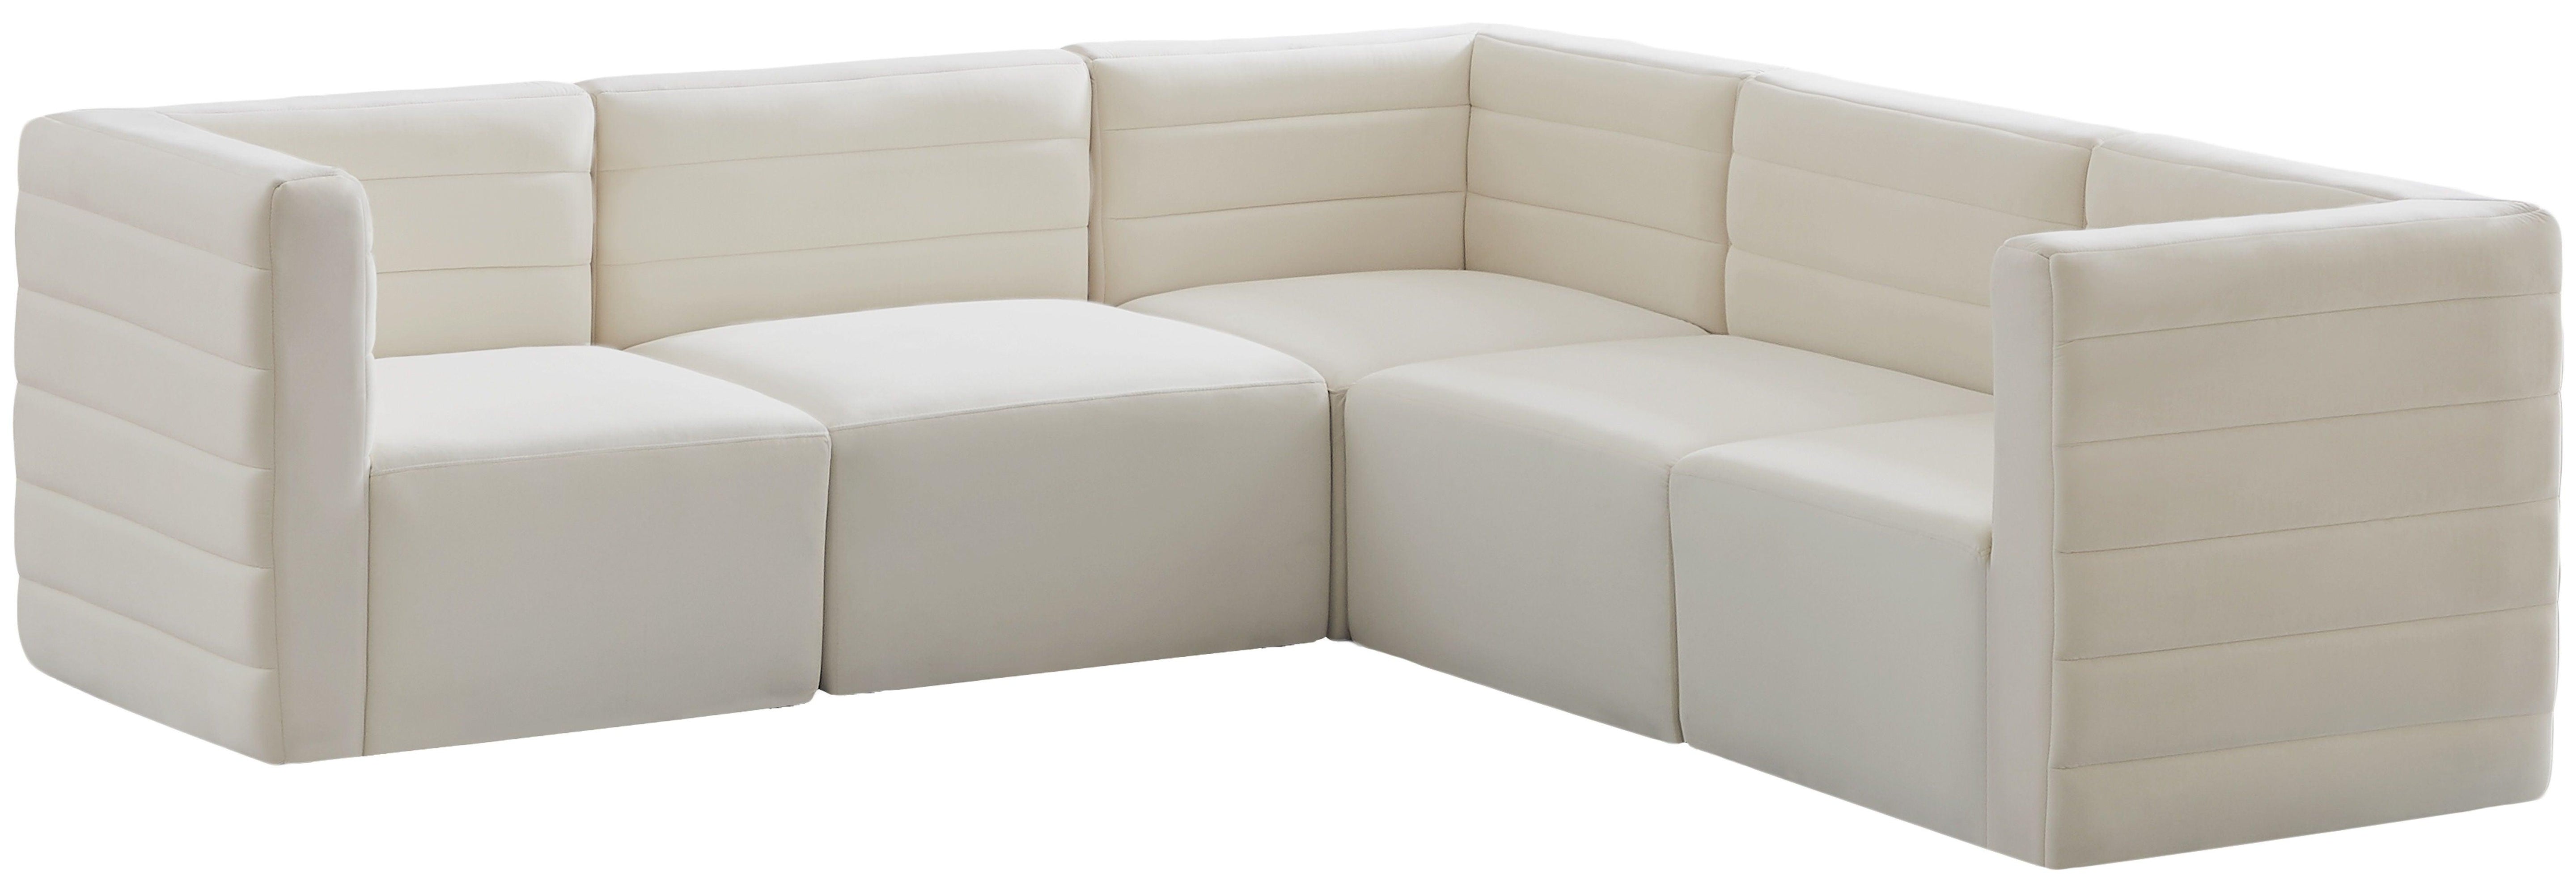 Meridian Furniture - Quincy - Modular Sectional 5 Piece - Cream - 5th Avenue Furniture